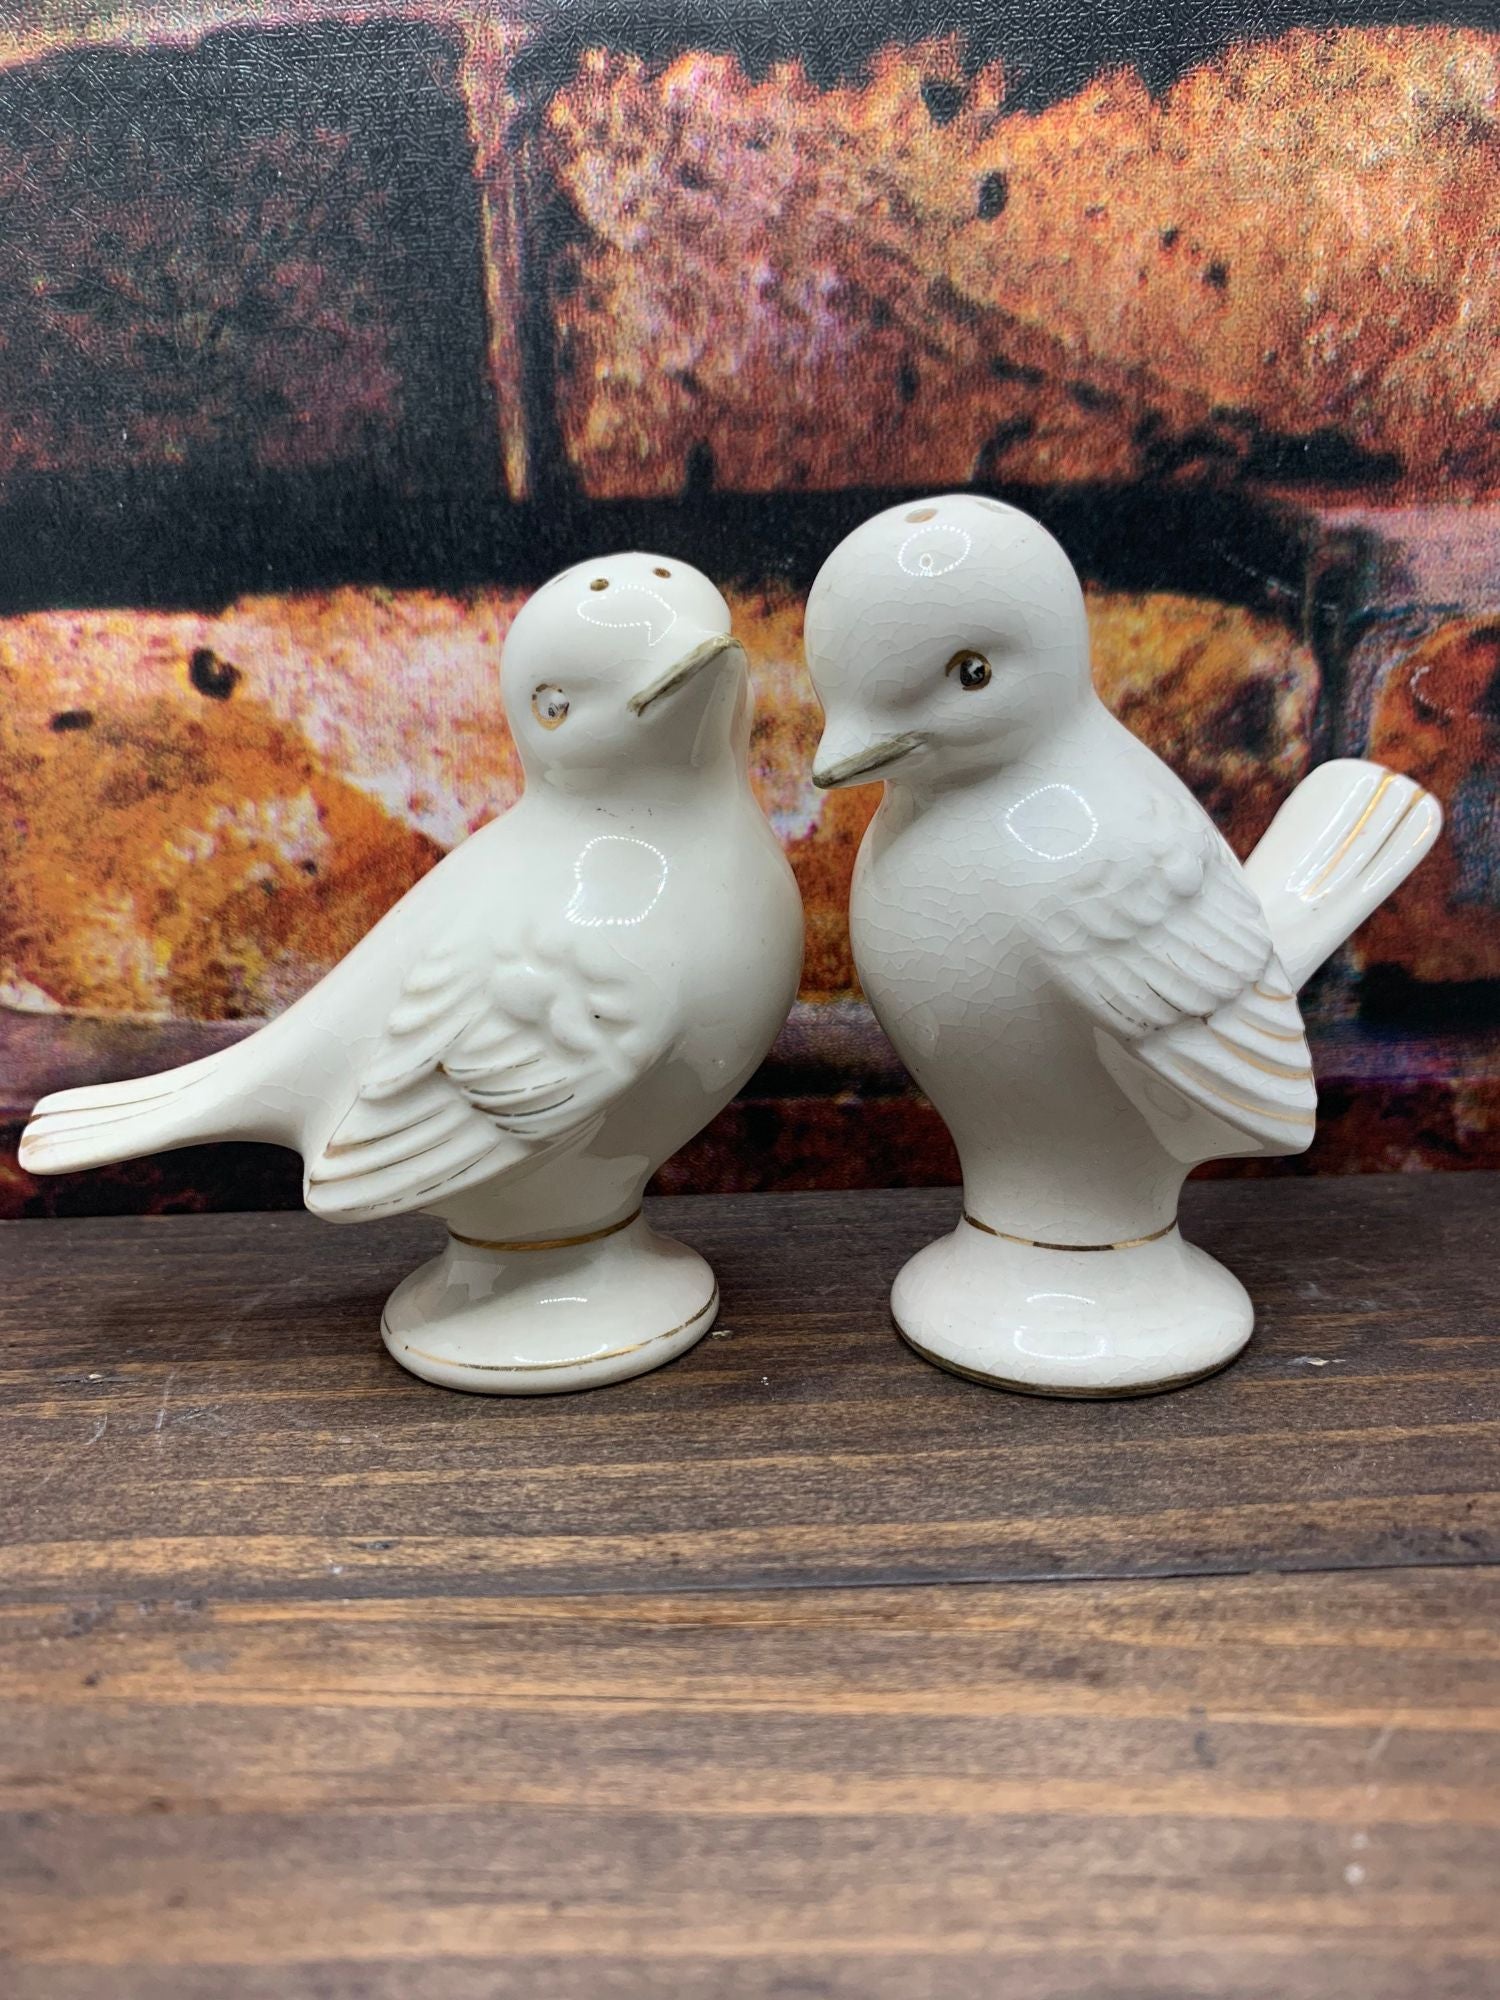 Vintage Ceramic White Dove Birds Salt & Pepper Shakers -Japan